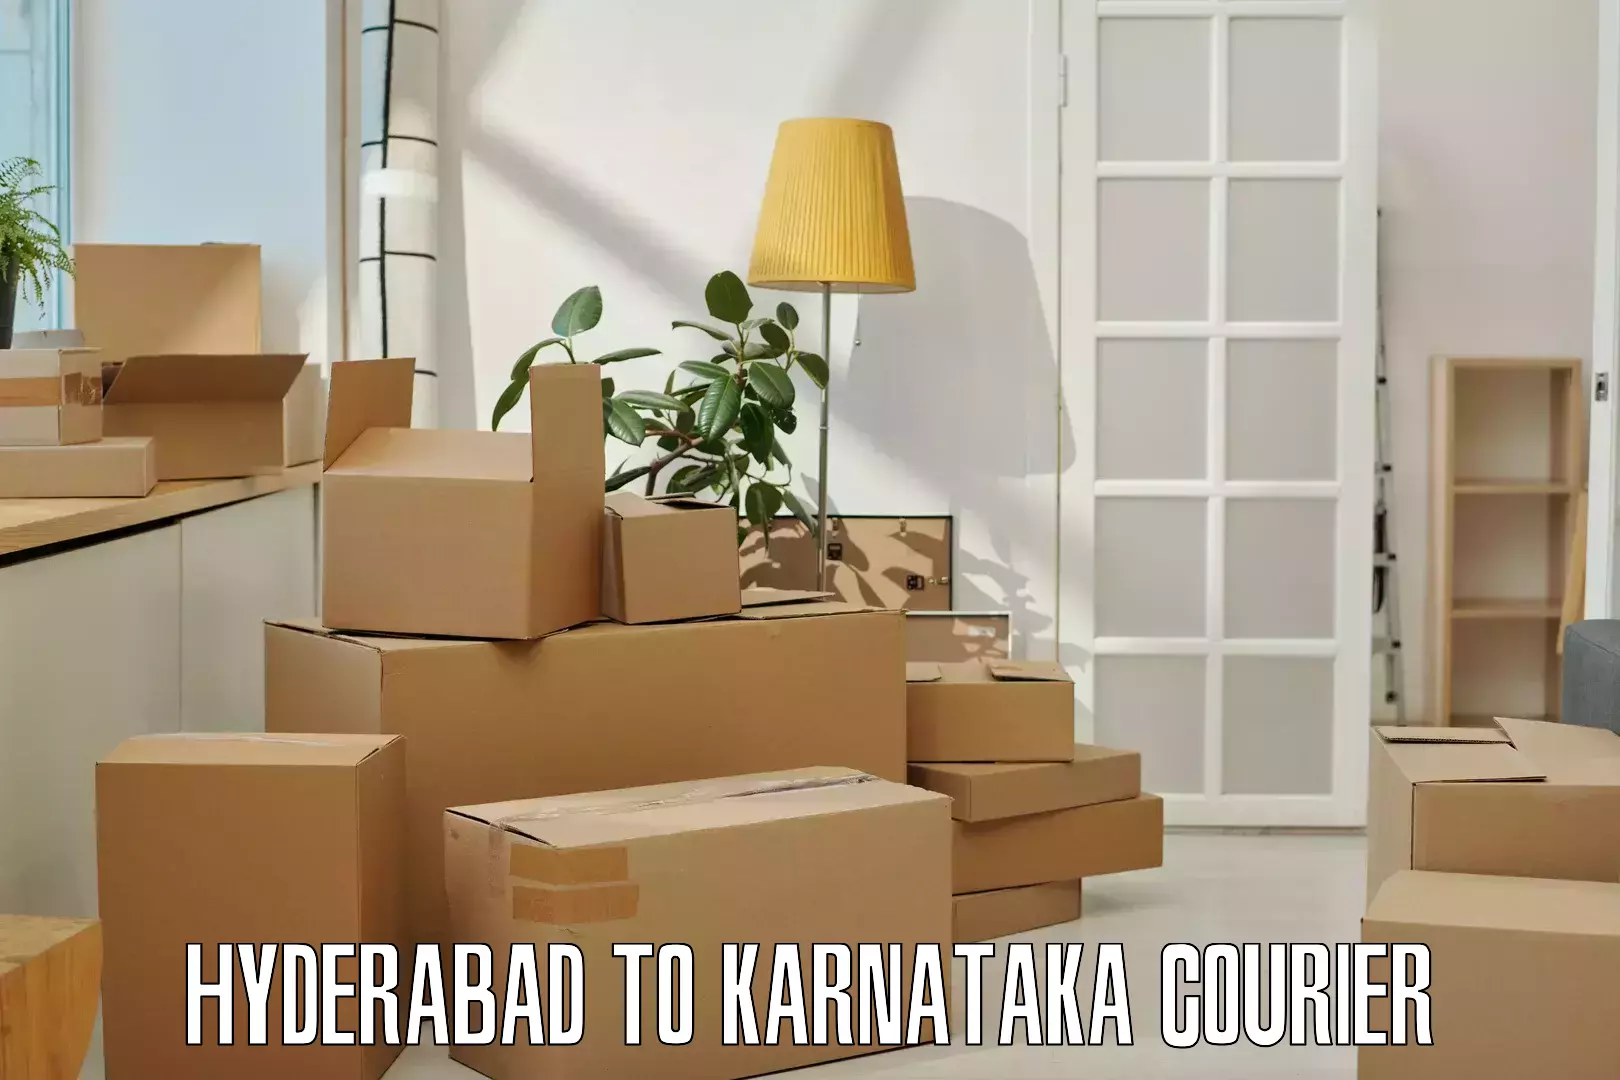 User-friendly courier app Hyderabad to Tiptur